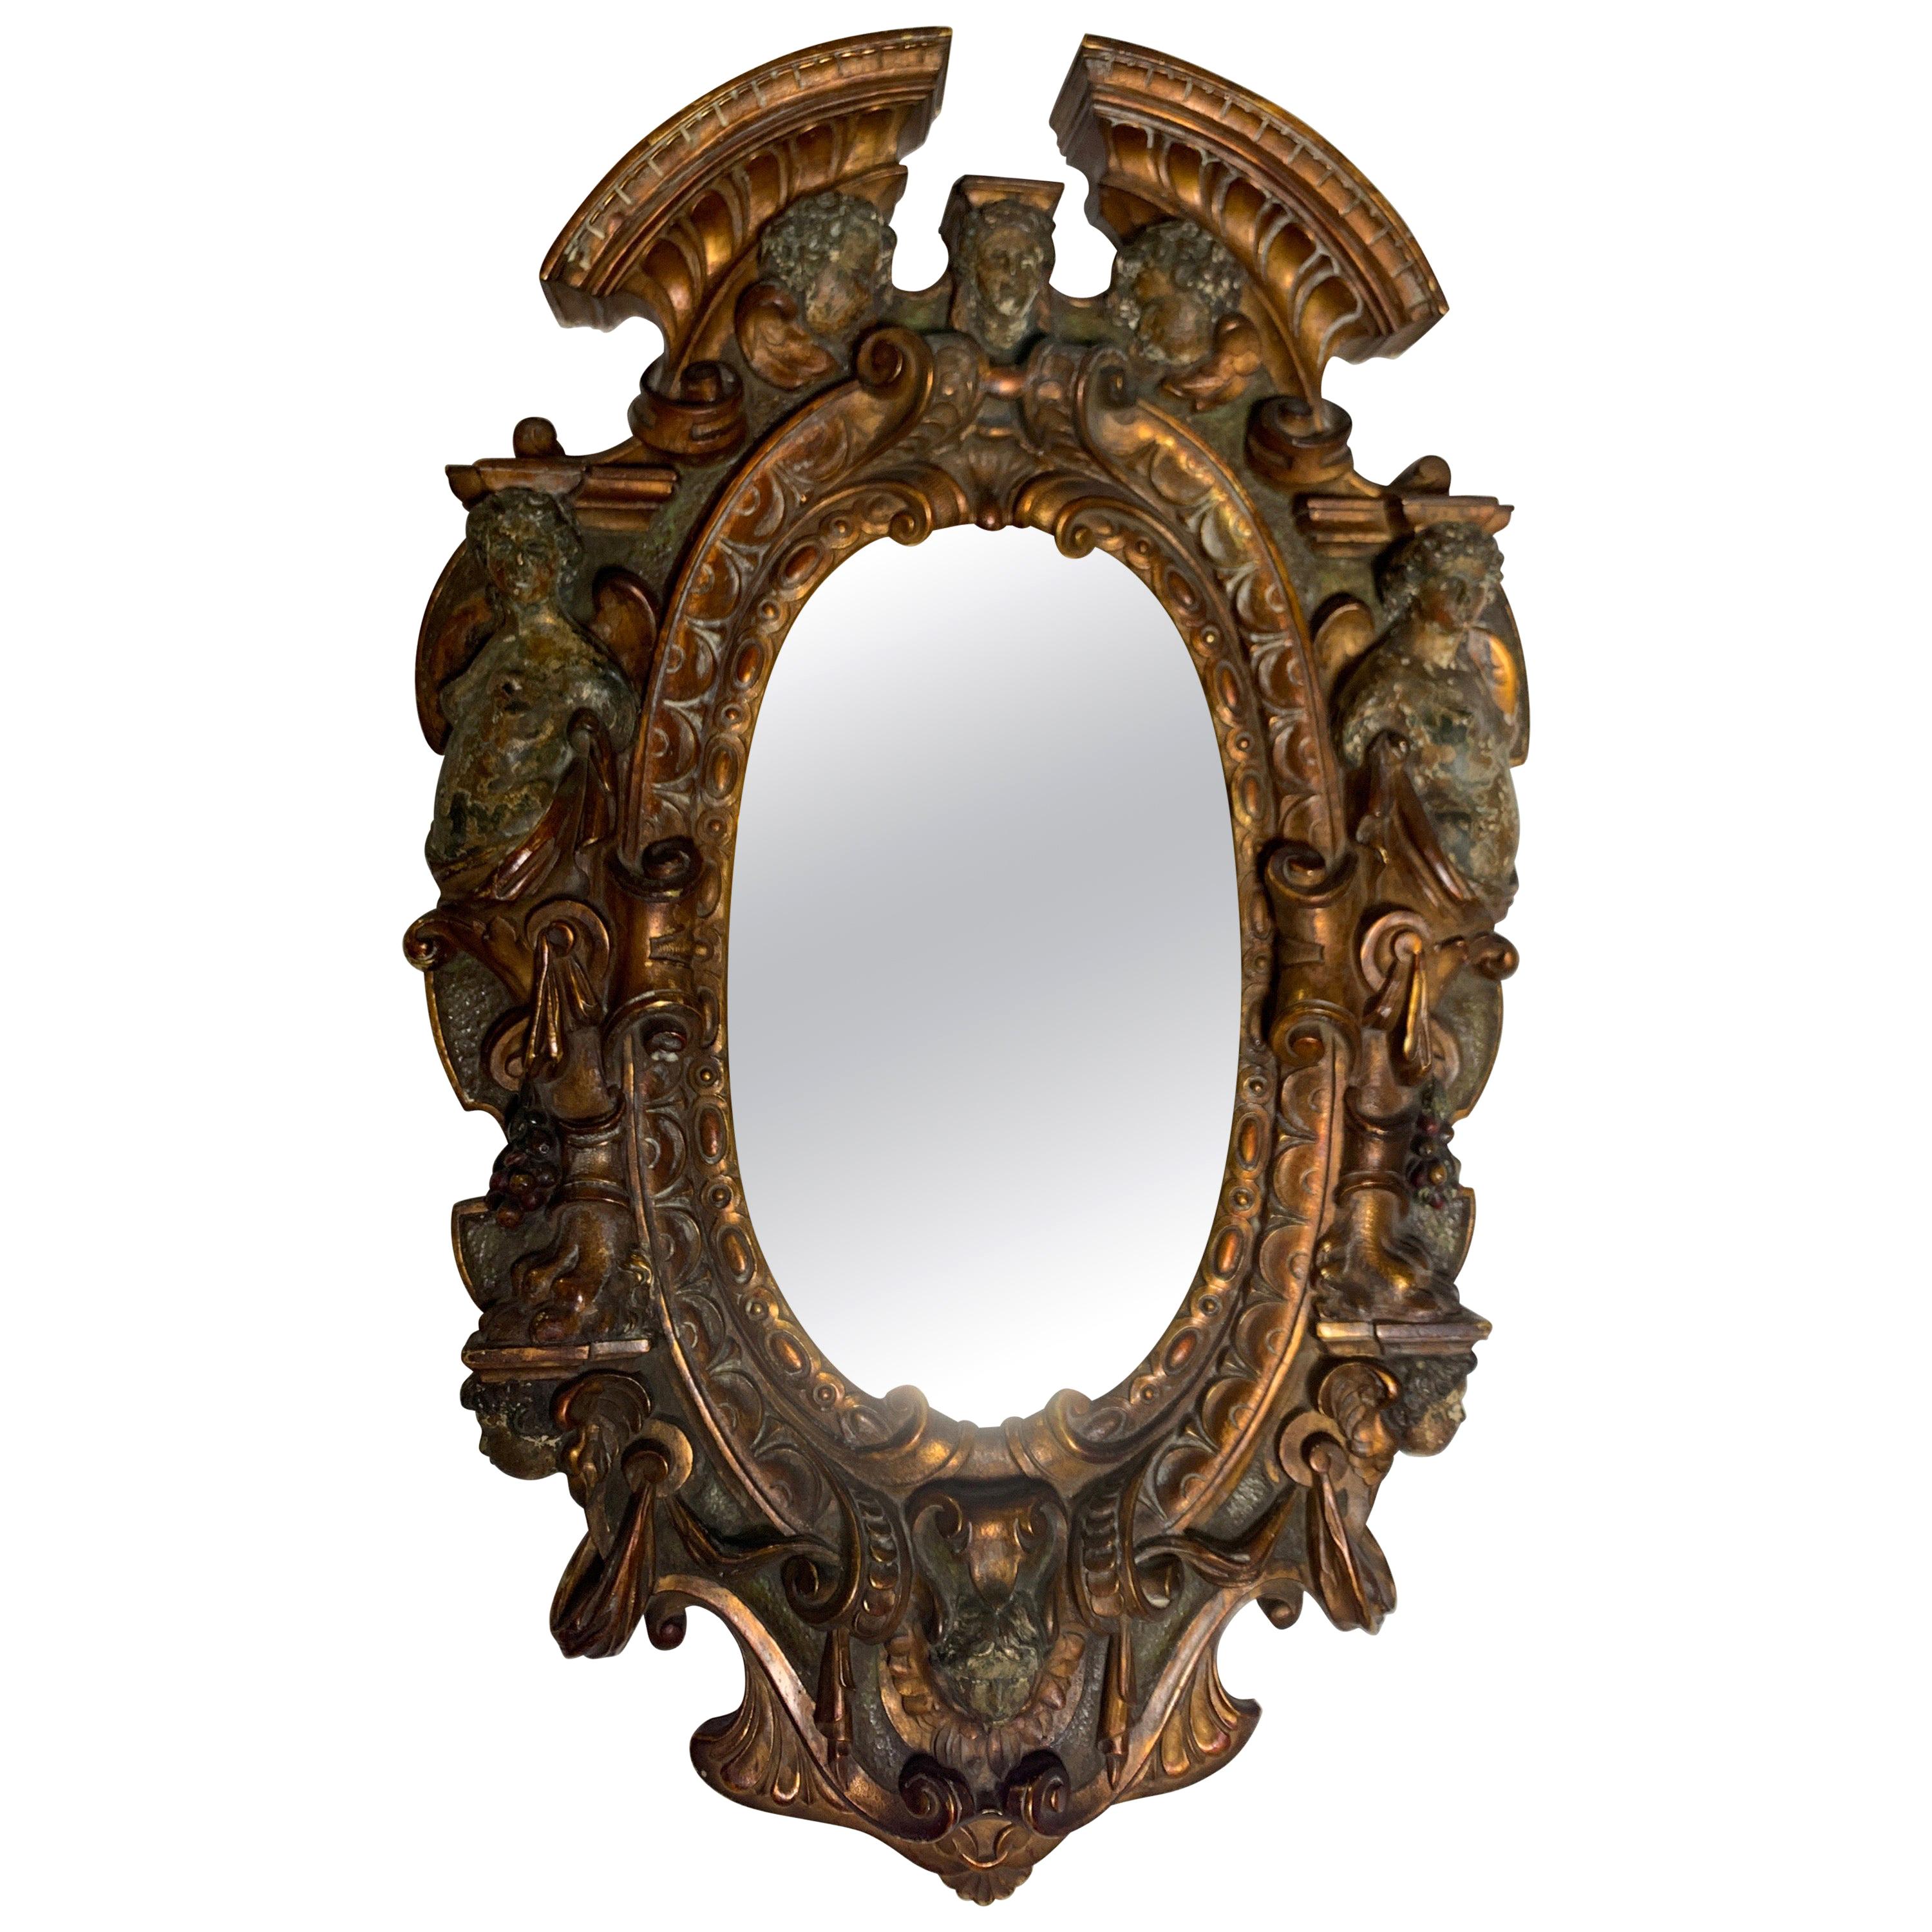 17th-18th Century Mixed Metal Italian Renaissance Mirror, Made in Tuscan Italy